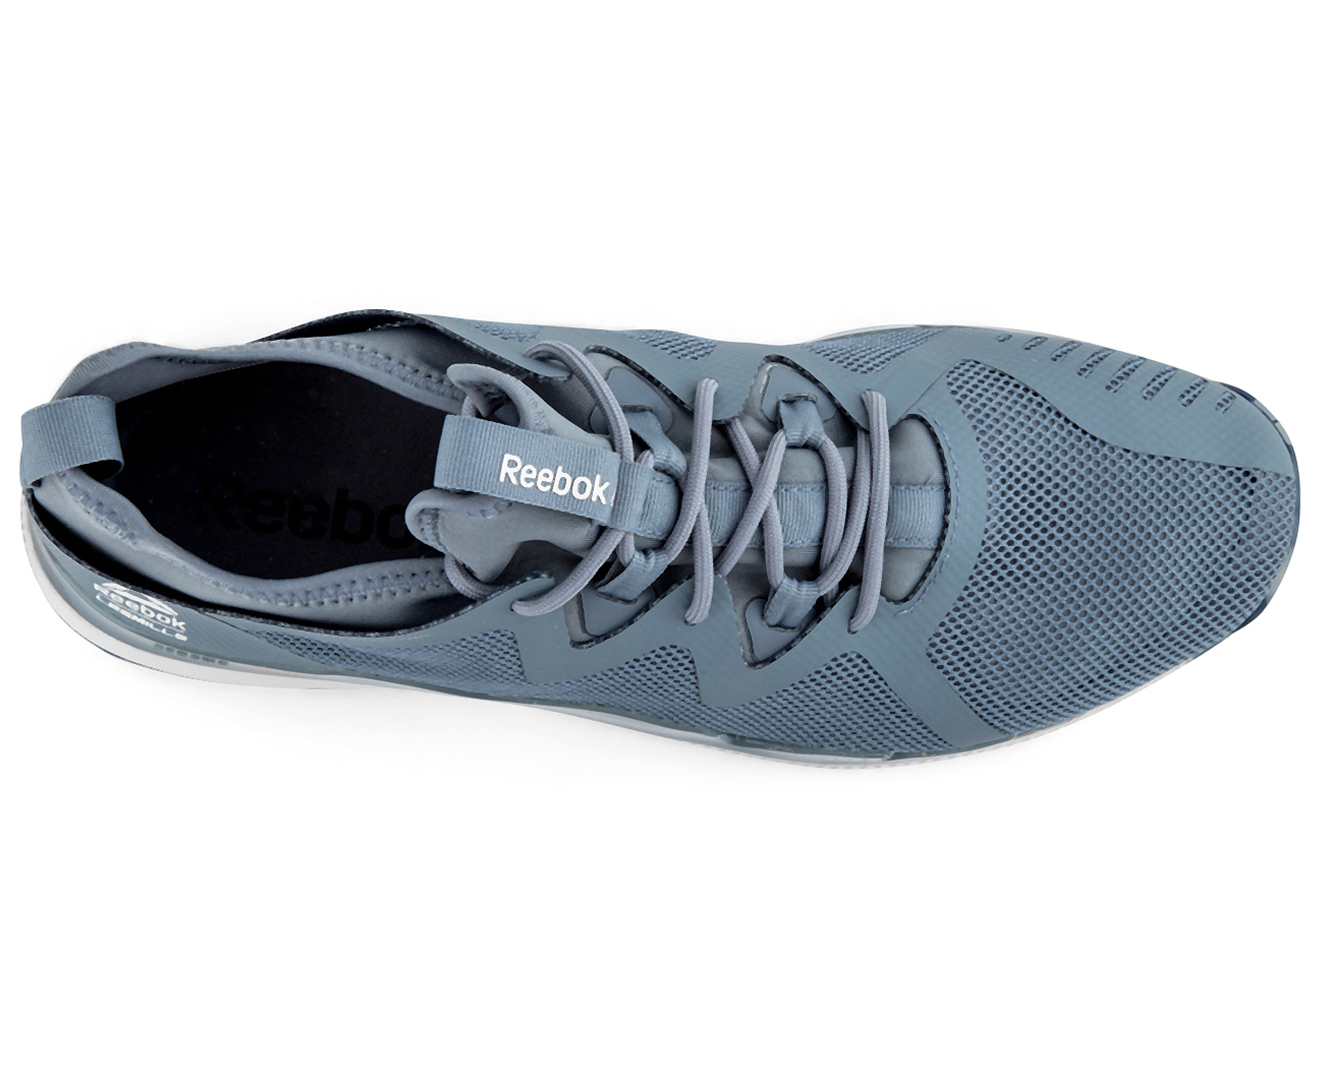 elke dag Pijler Gladys Reebok Men's Ultra 4.0 LM Shoe - Dust/Stone/Indigo/White | Catch.com.au